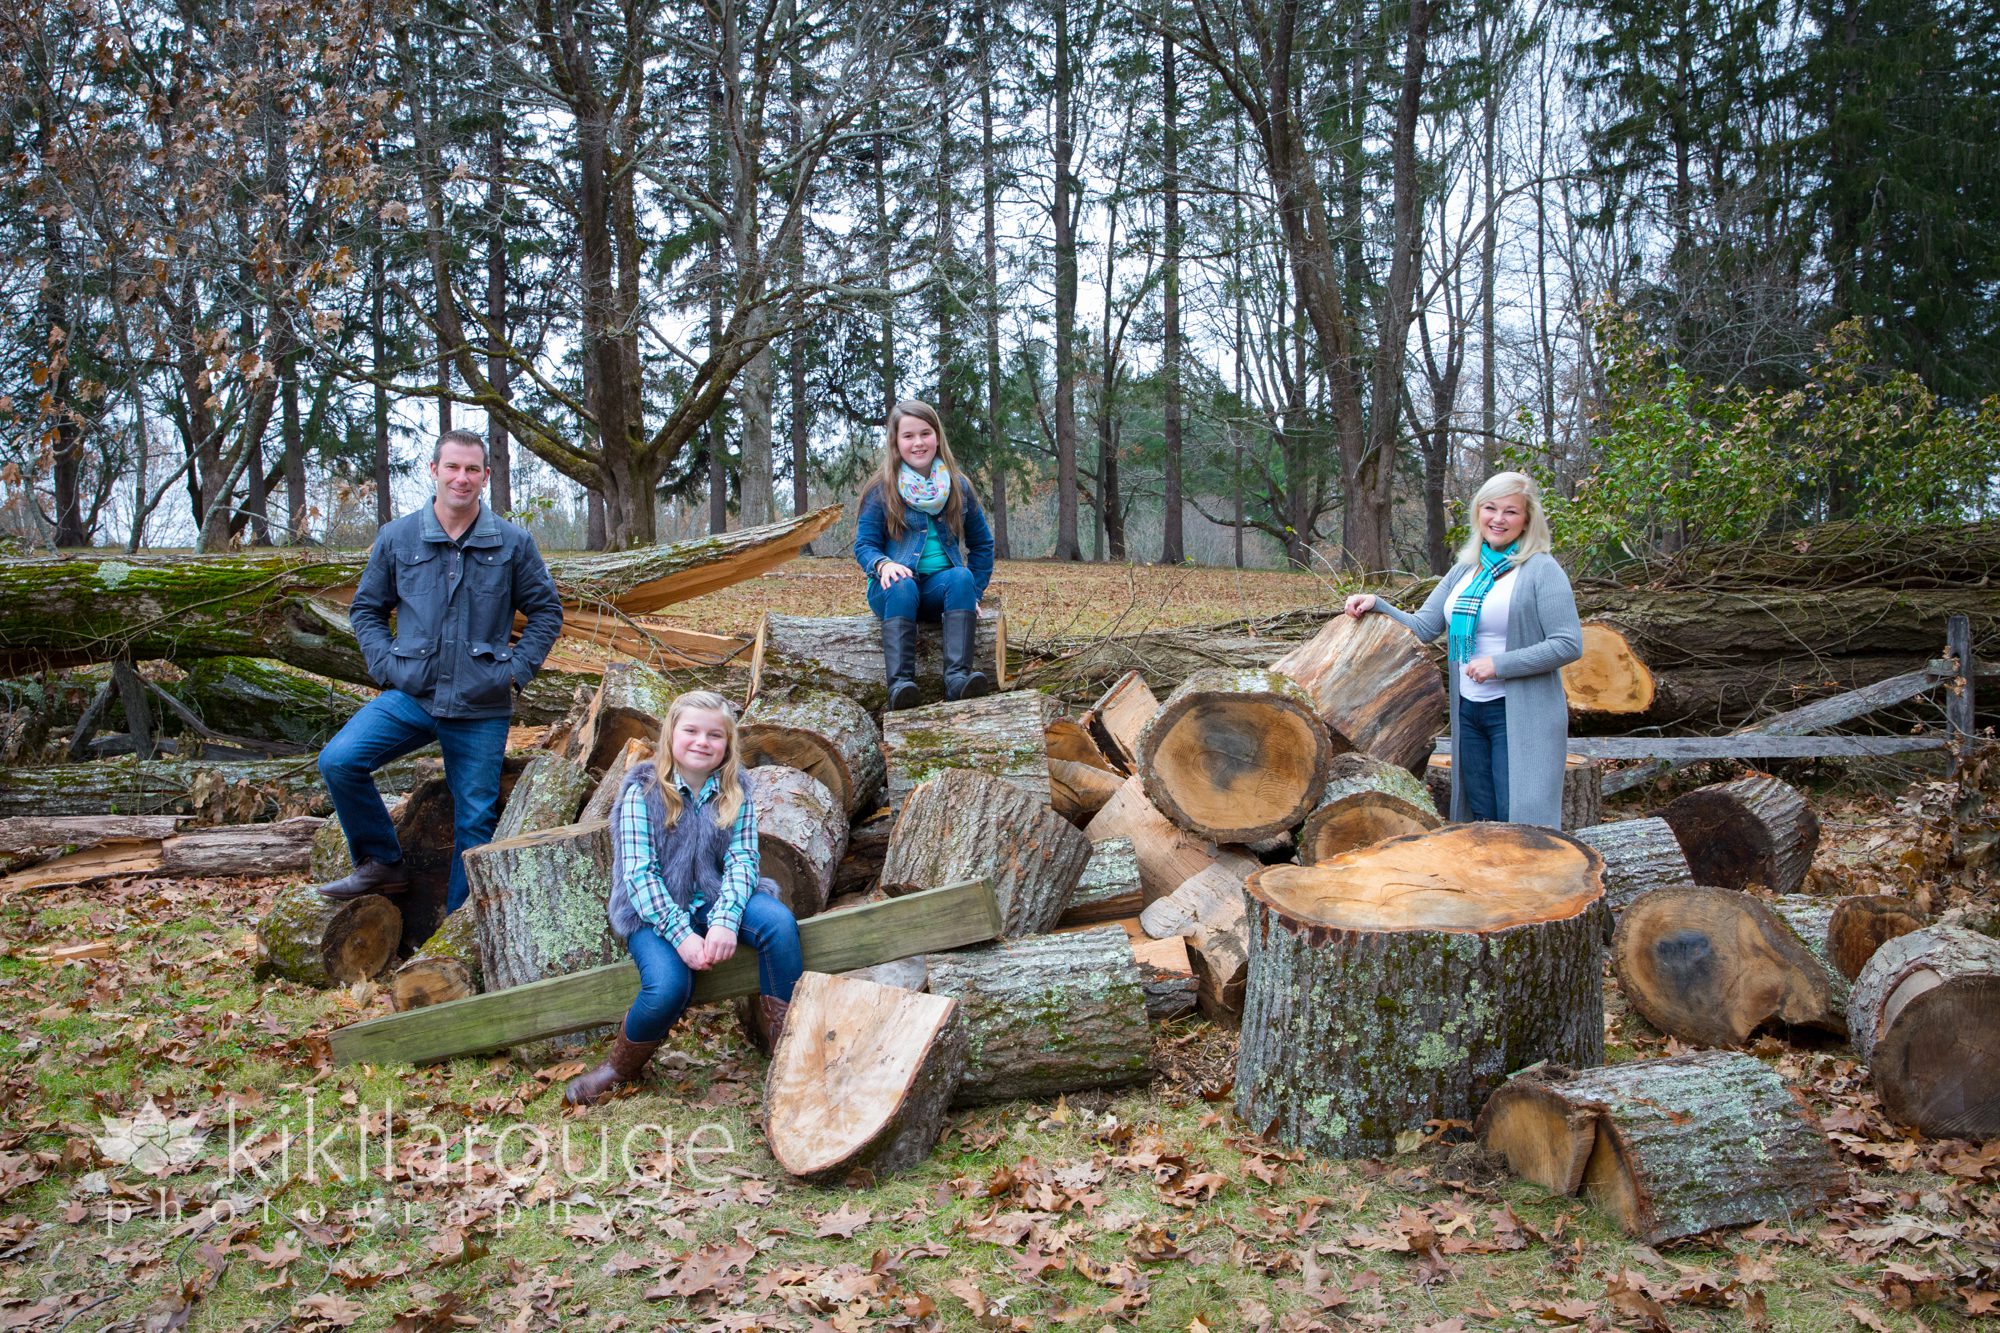 Family portrait on logs in woods